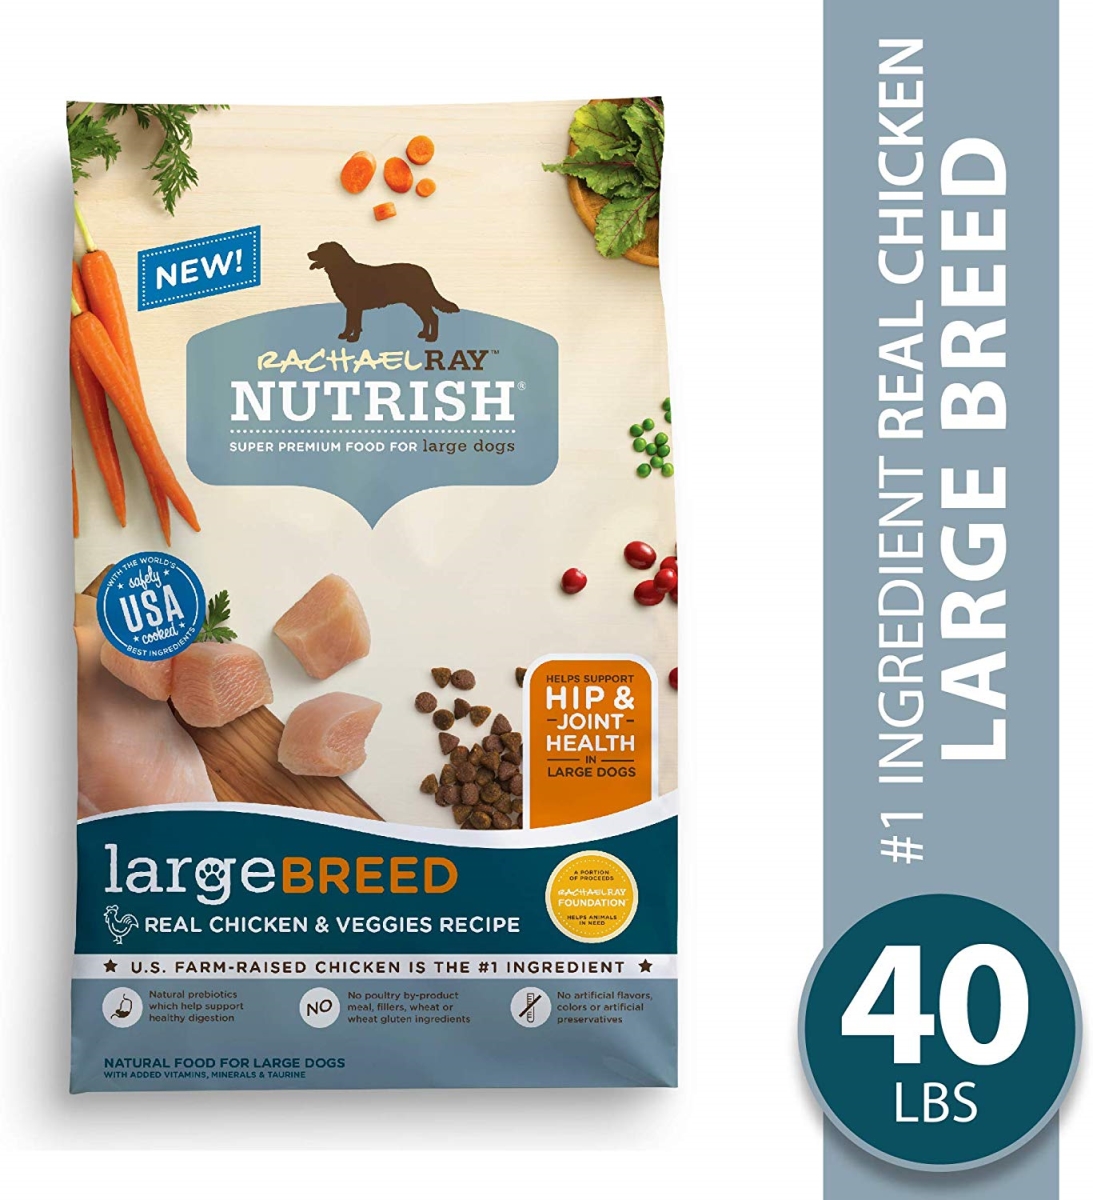 790063 40 Lbs Large Breed Rachael Ray Nutrish Dry Dog Food Chicken & Veggies